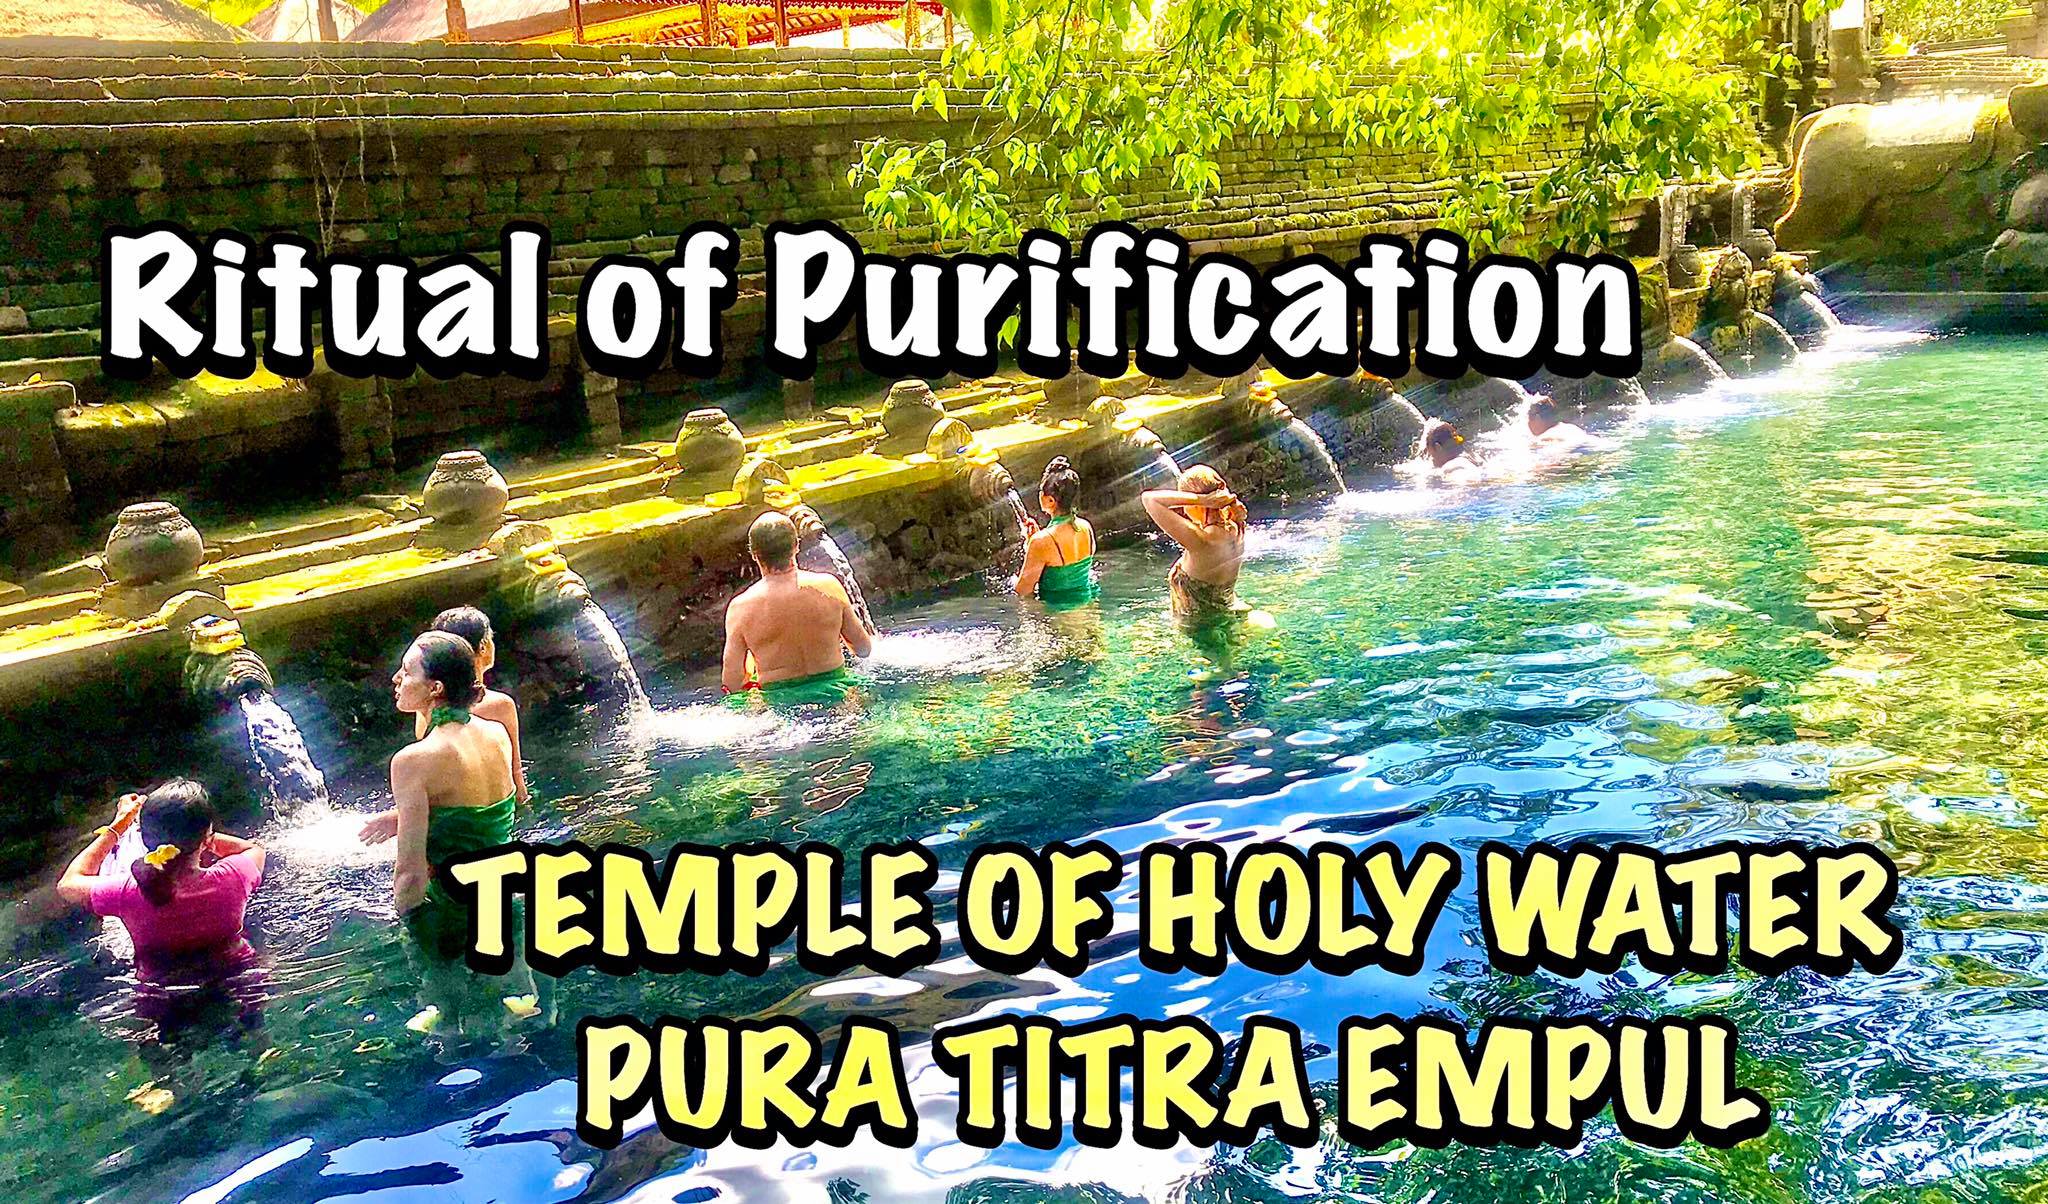 Ritual at pura titra empul